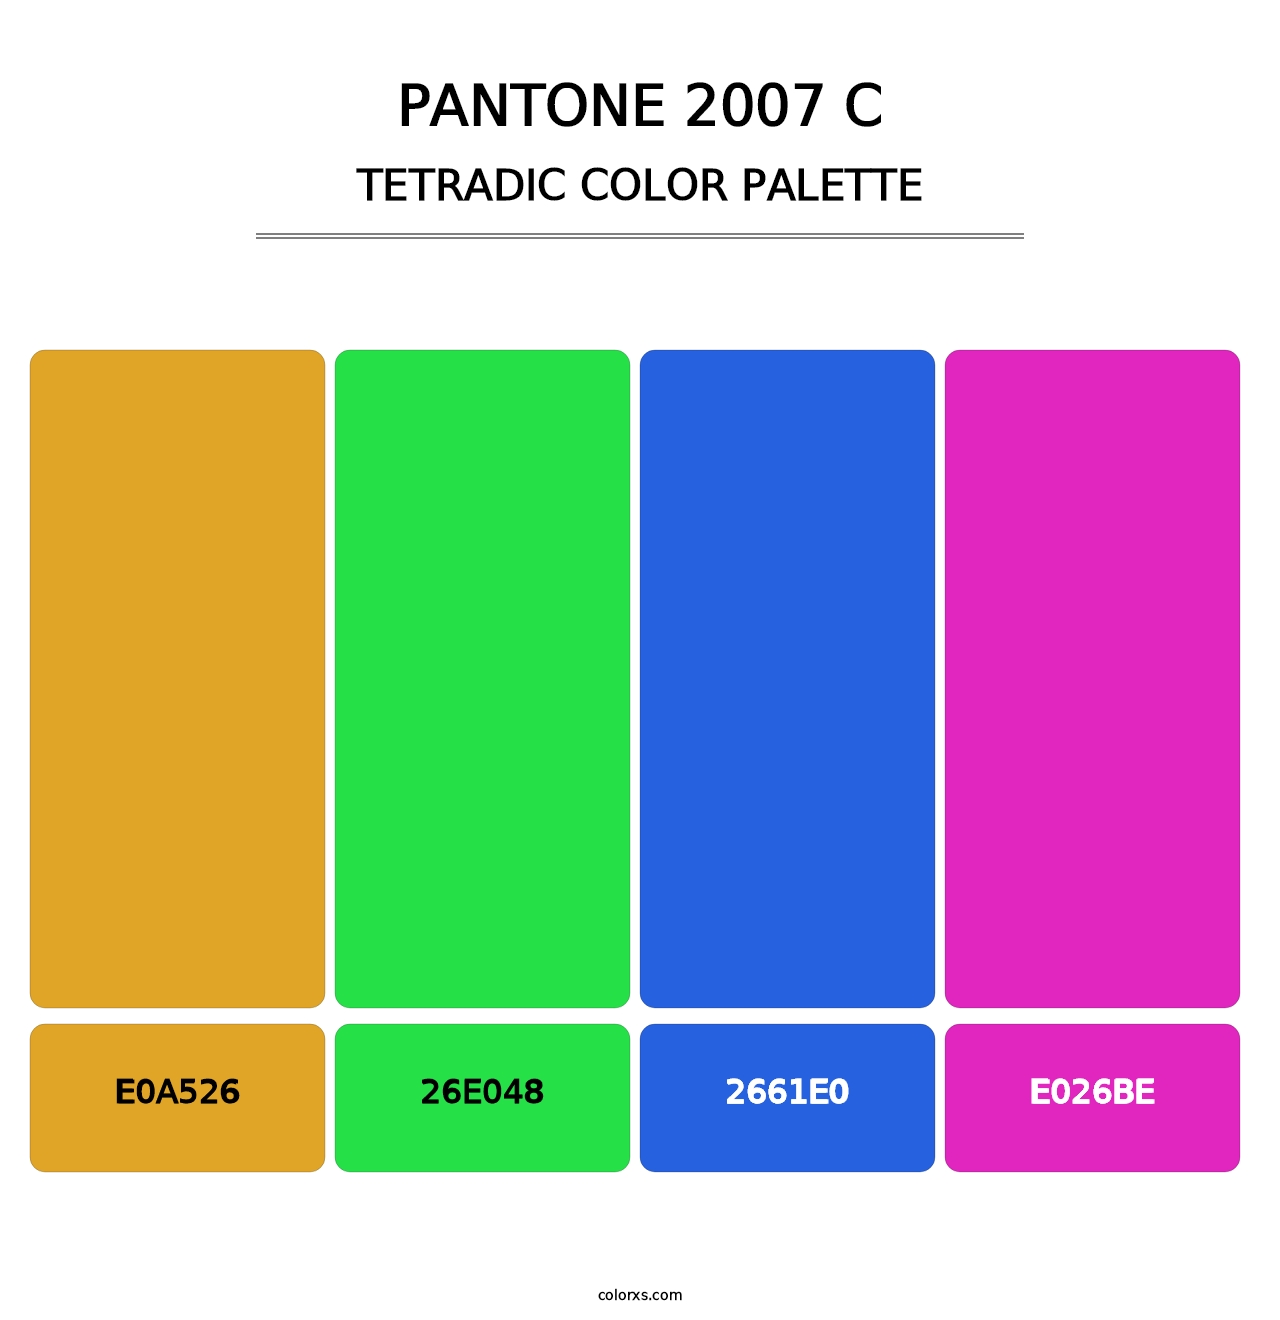 PANTONE 2007 C - Tetradic Color Palette